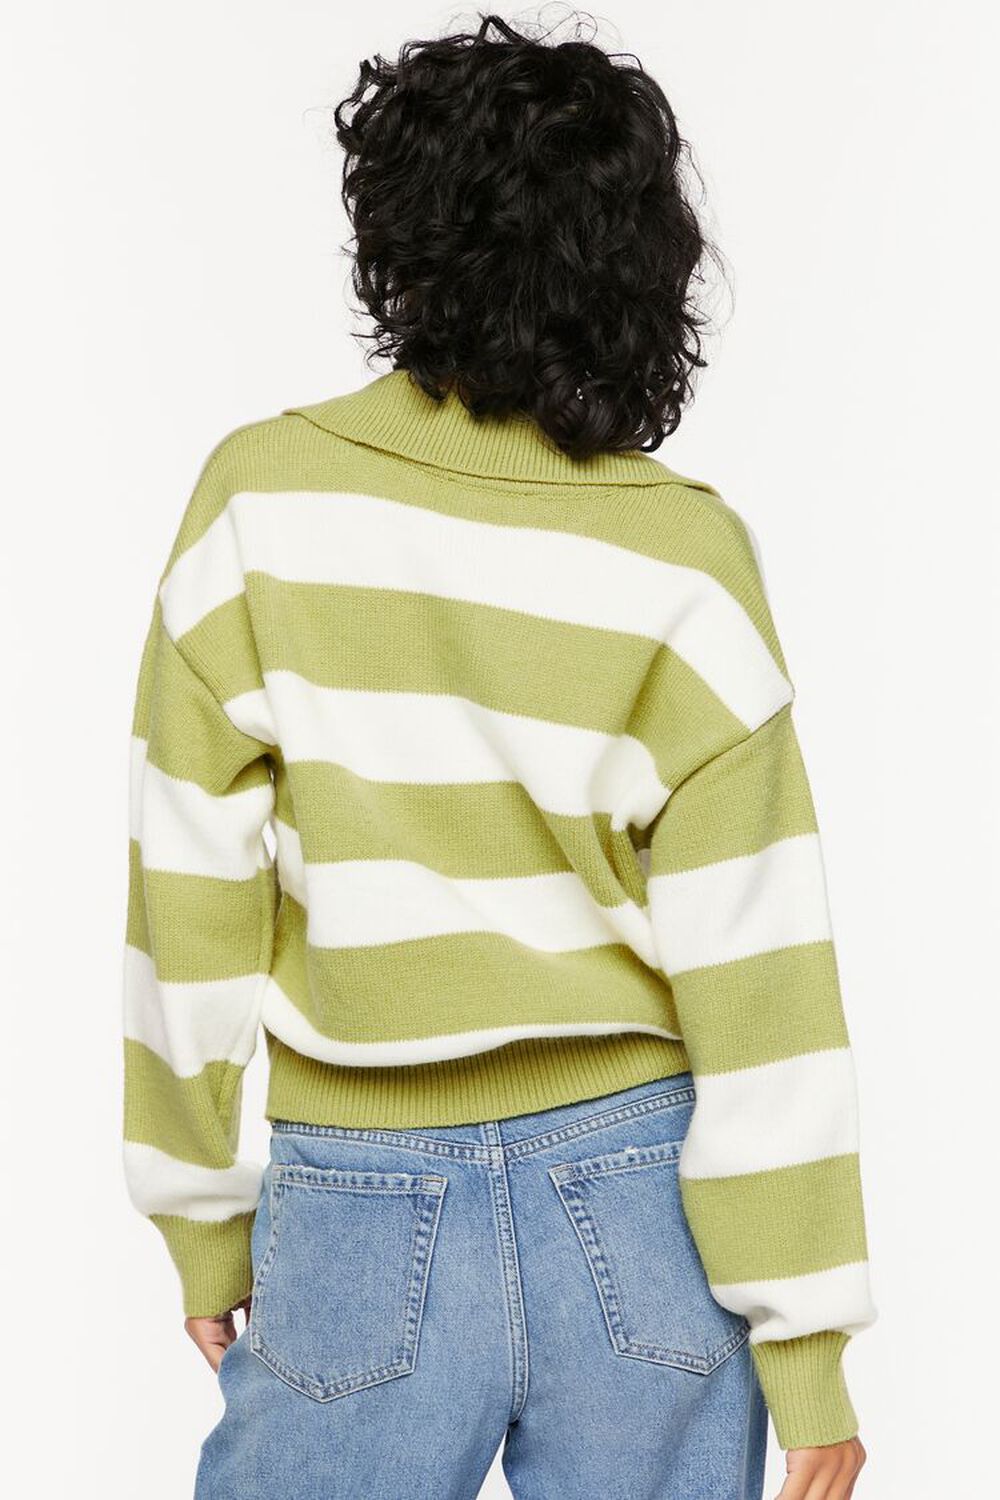 GREEN/CREAM Striped Collared Sweater, image 3